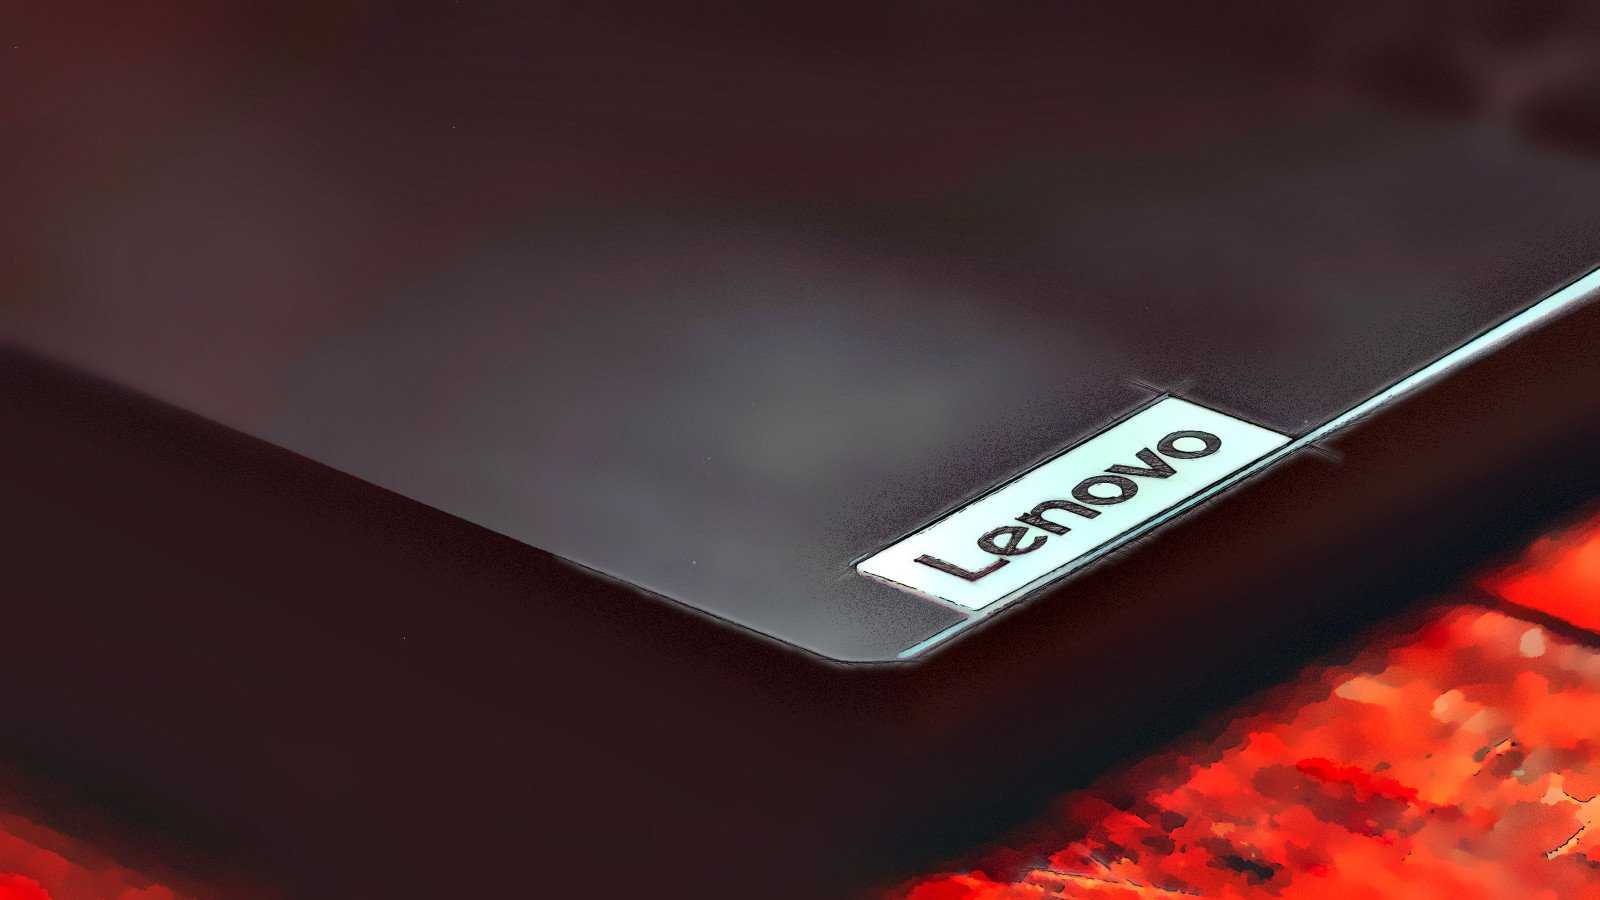 UEFI firmware vulnerabilities affect over 100 Lenovo notebook models